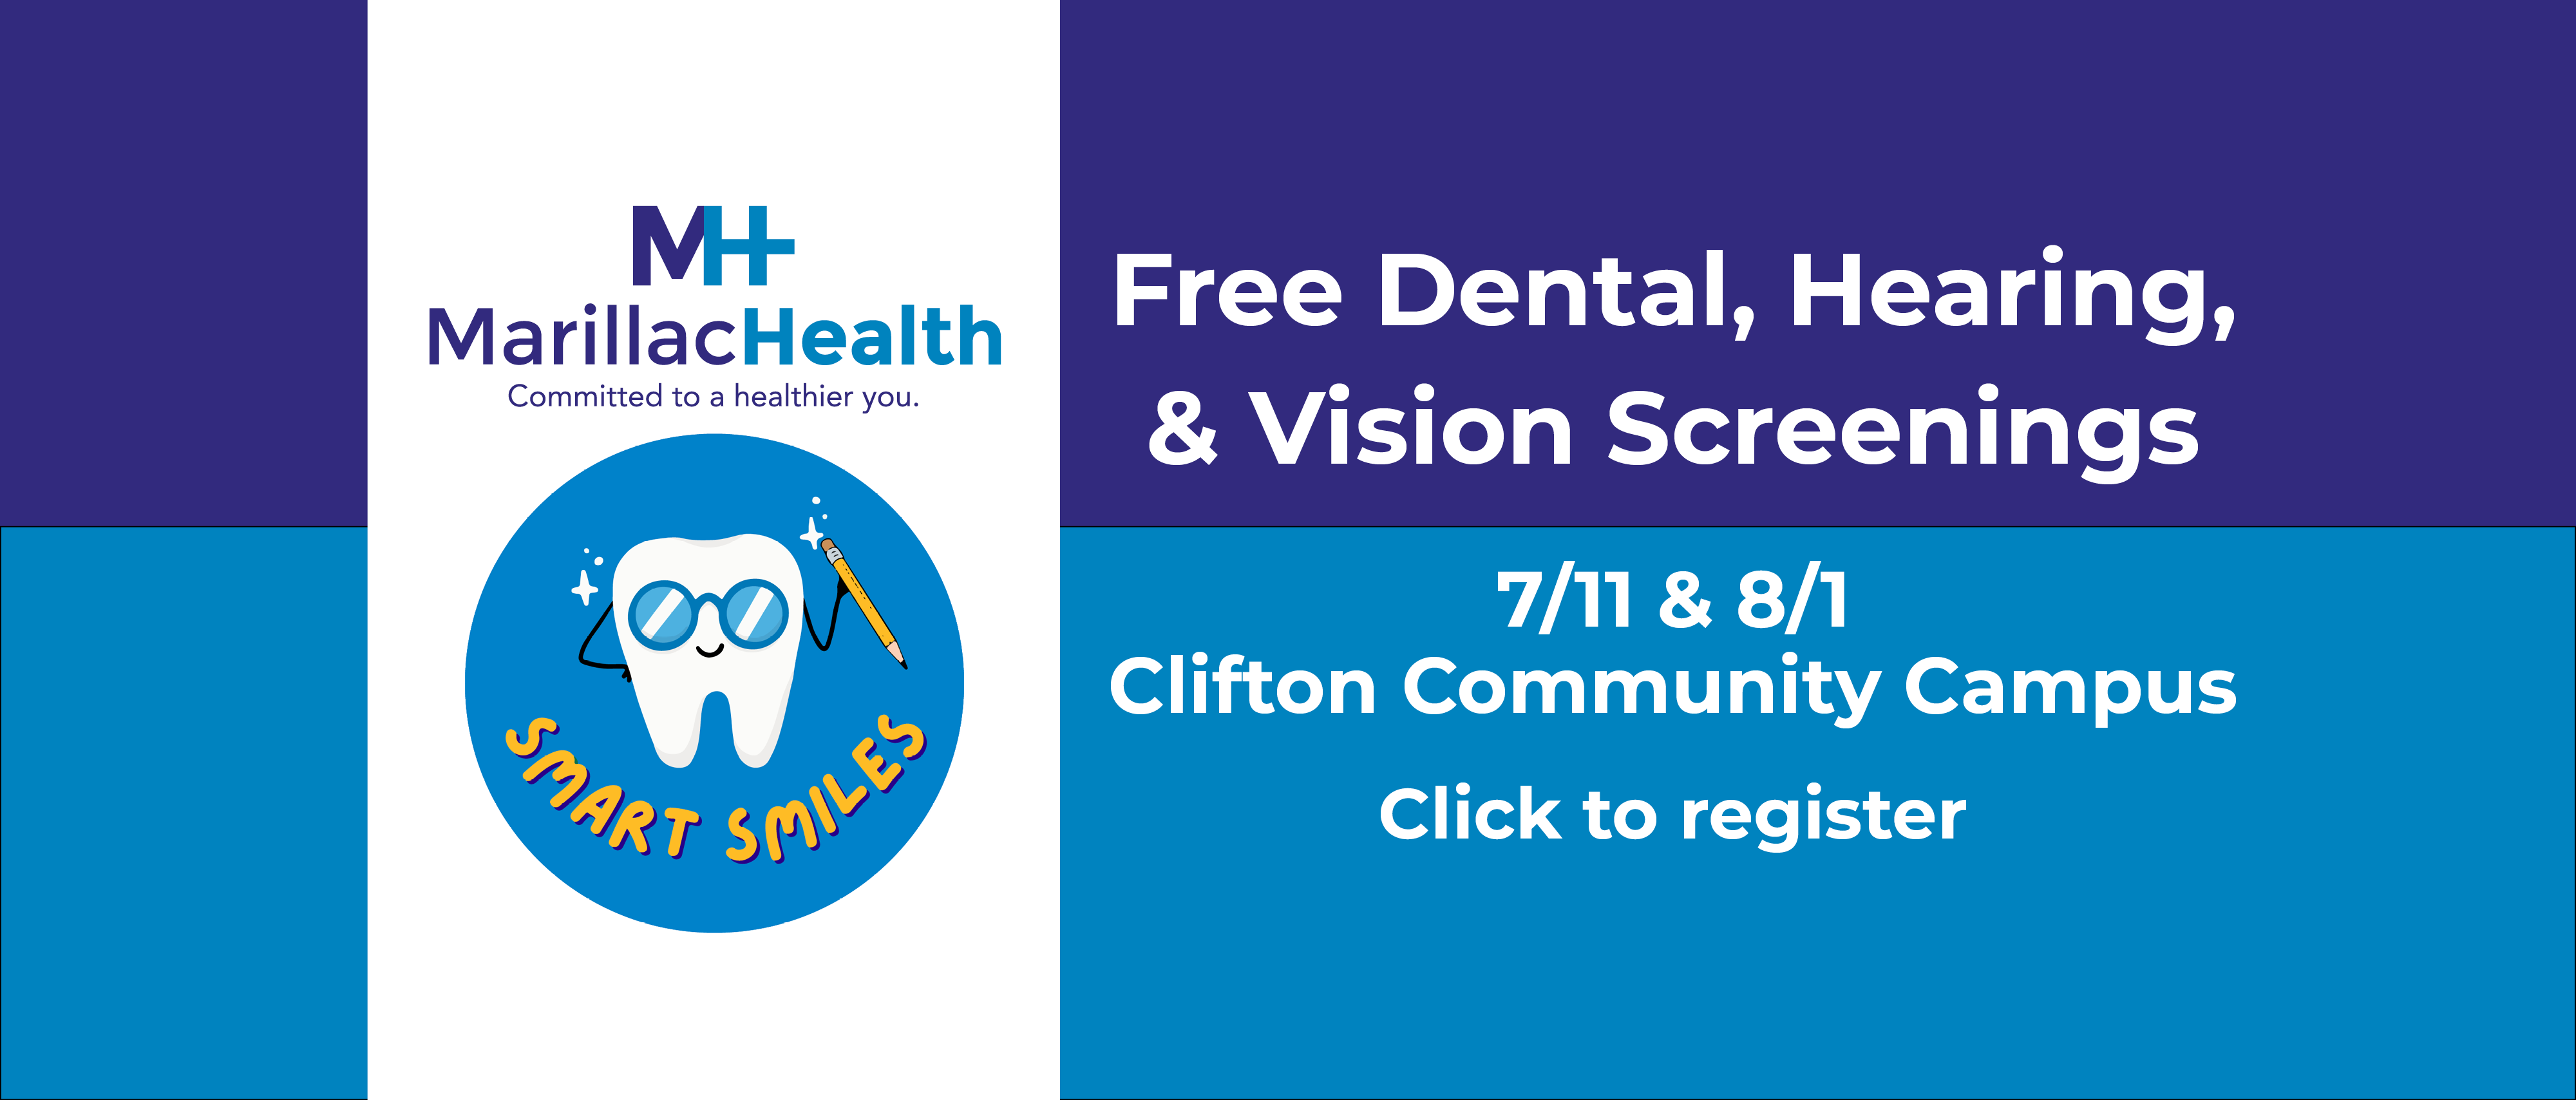 free dental hearing vision screenings graphic